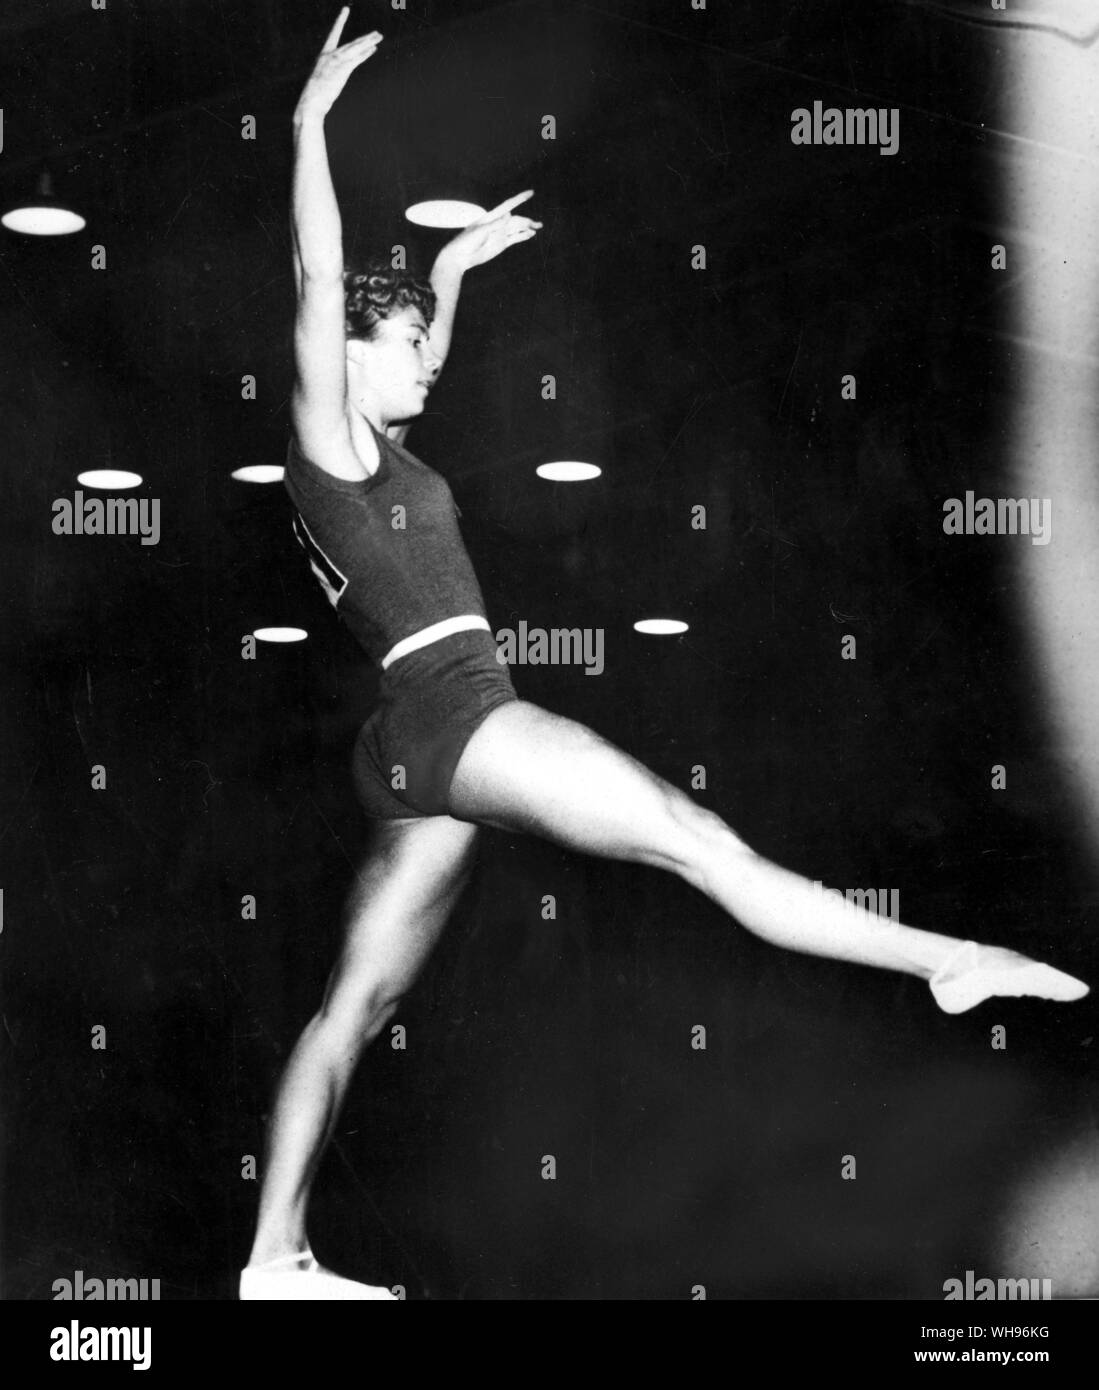 Aus., Melbourne, Olimpiadi, 1956: Larisa Latynina (URSS), vincitore di ben nove medaglie d'oro, 5 d'argento e 4 di bronzo in ginnastica.. Foto Stock